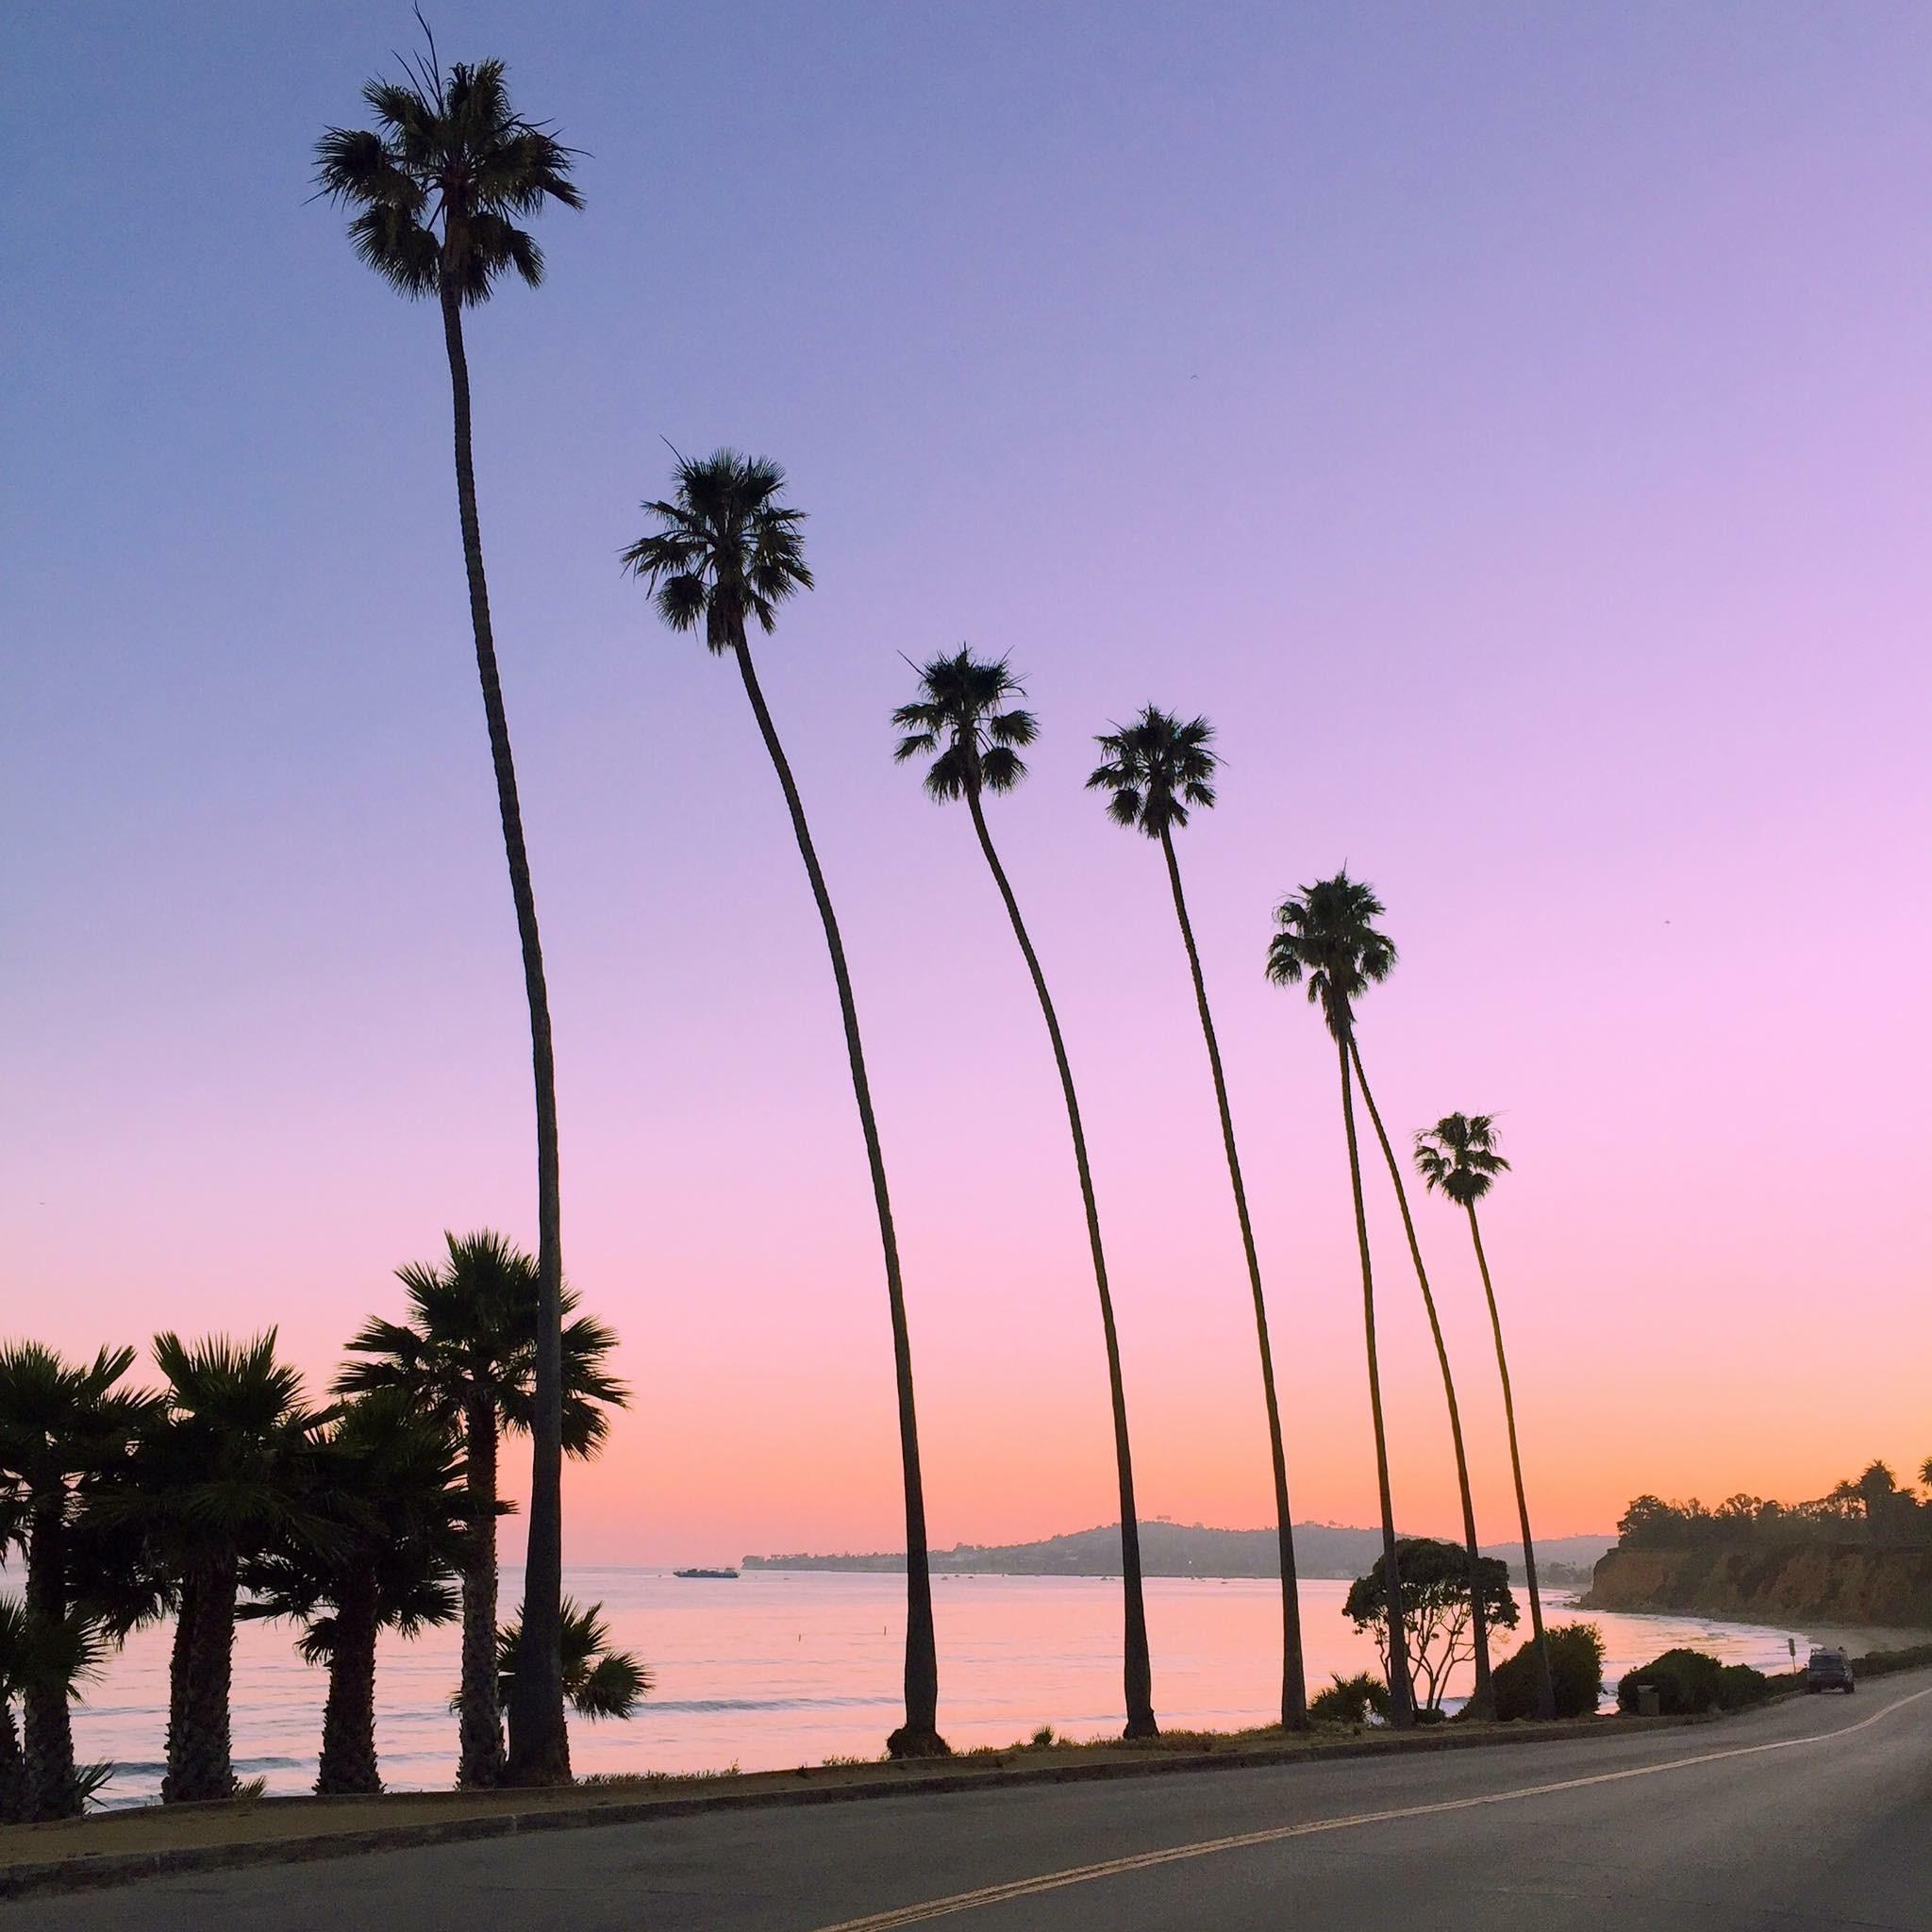 Daydreaming 🌴☀️❤️
#kalifornien #palmen #vitaminsea #sundown #throwback #holidays #memories #santabarbara #roadtrip